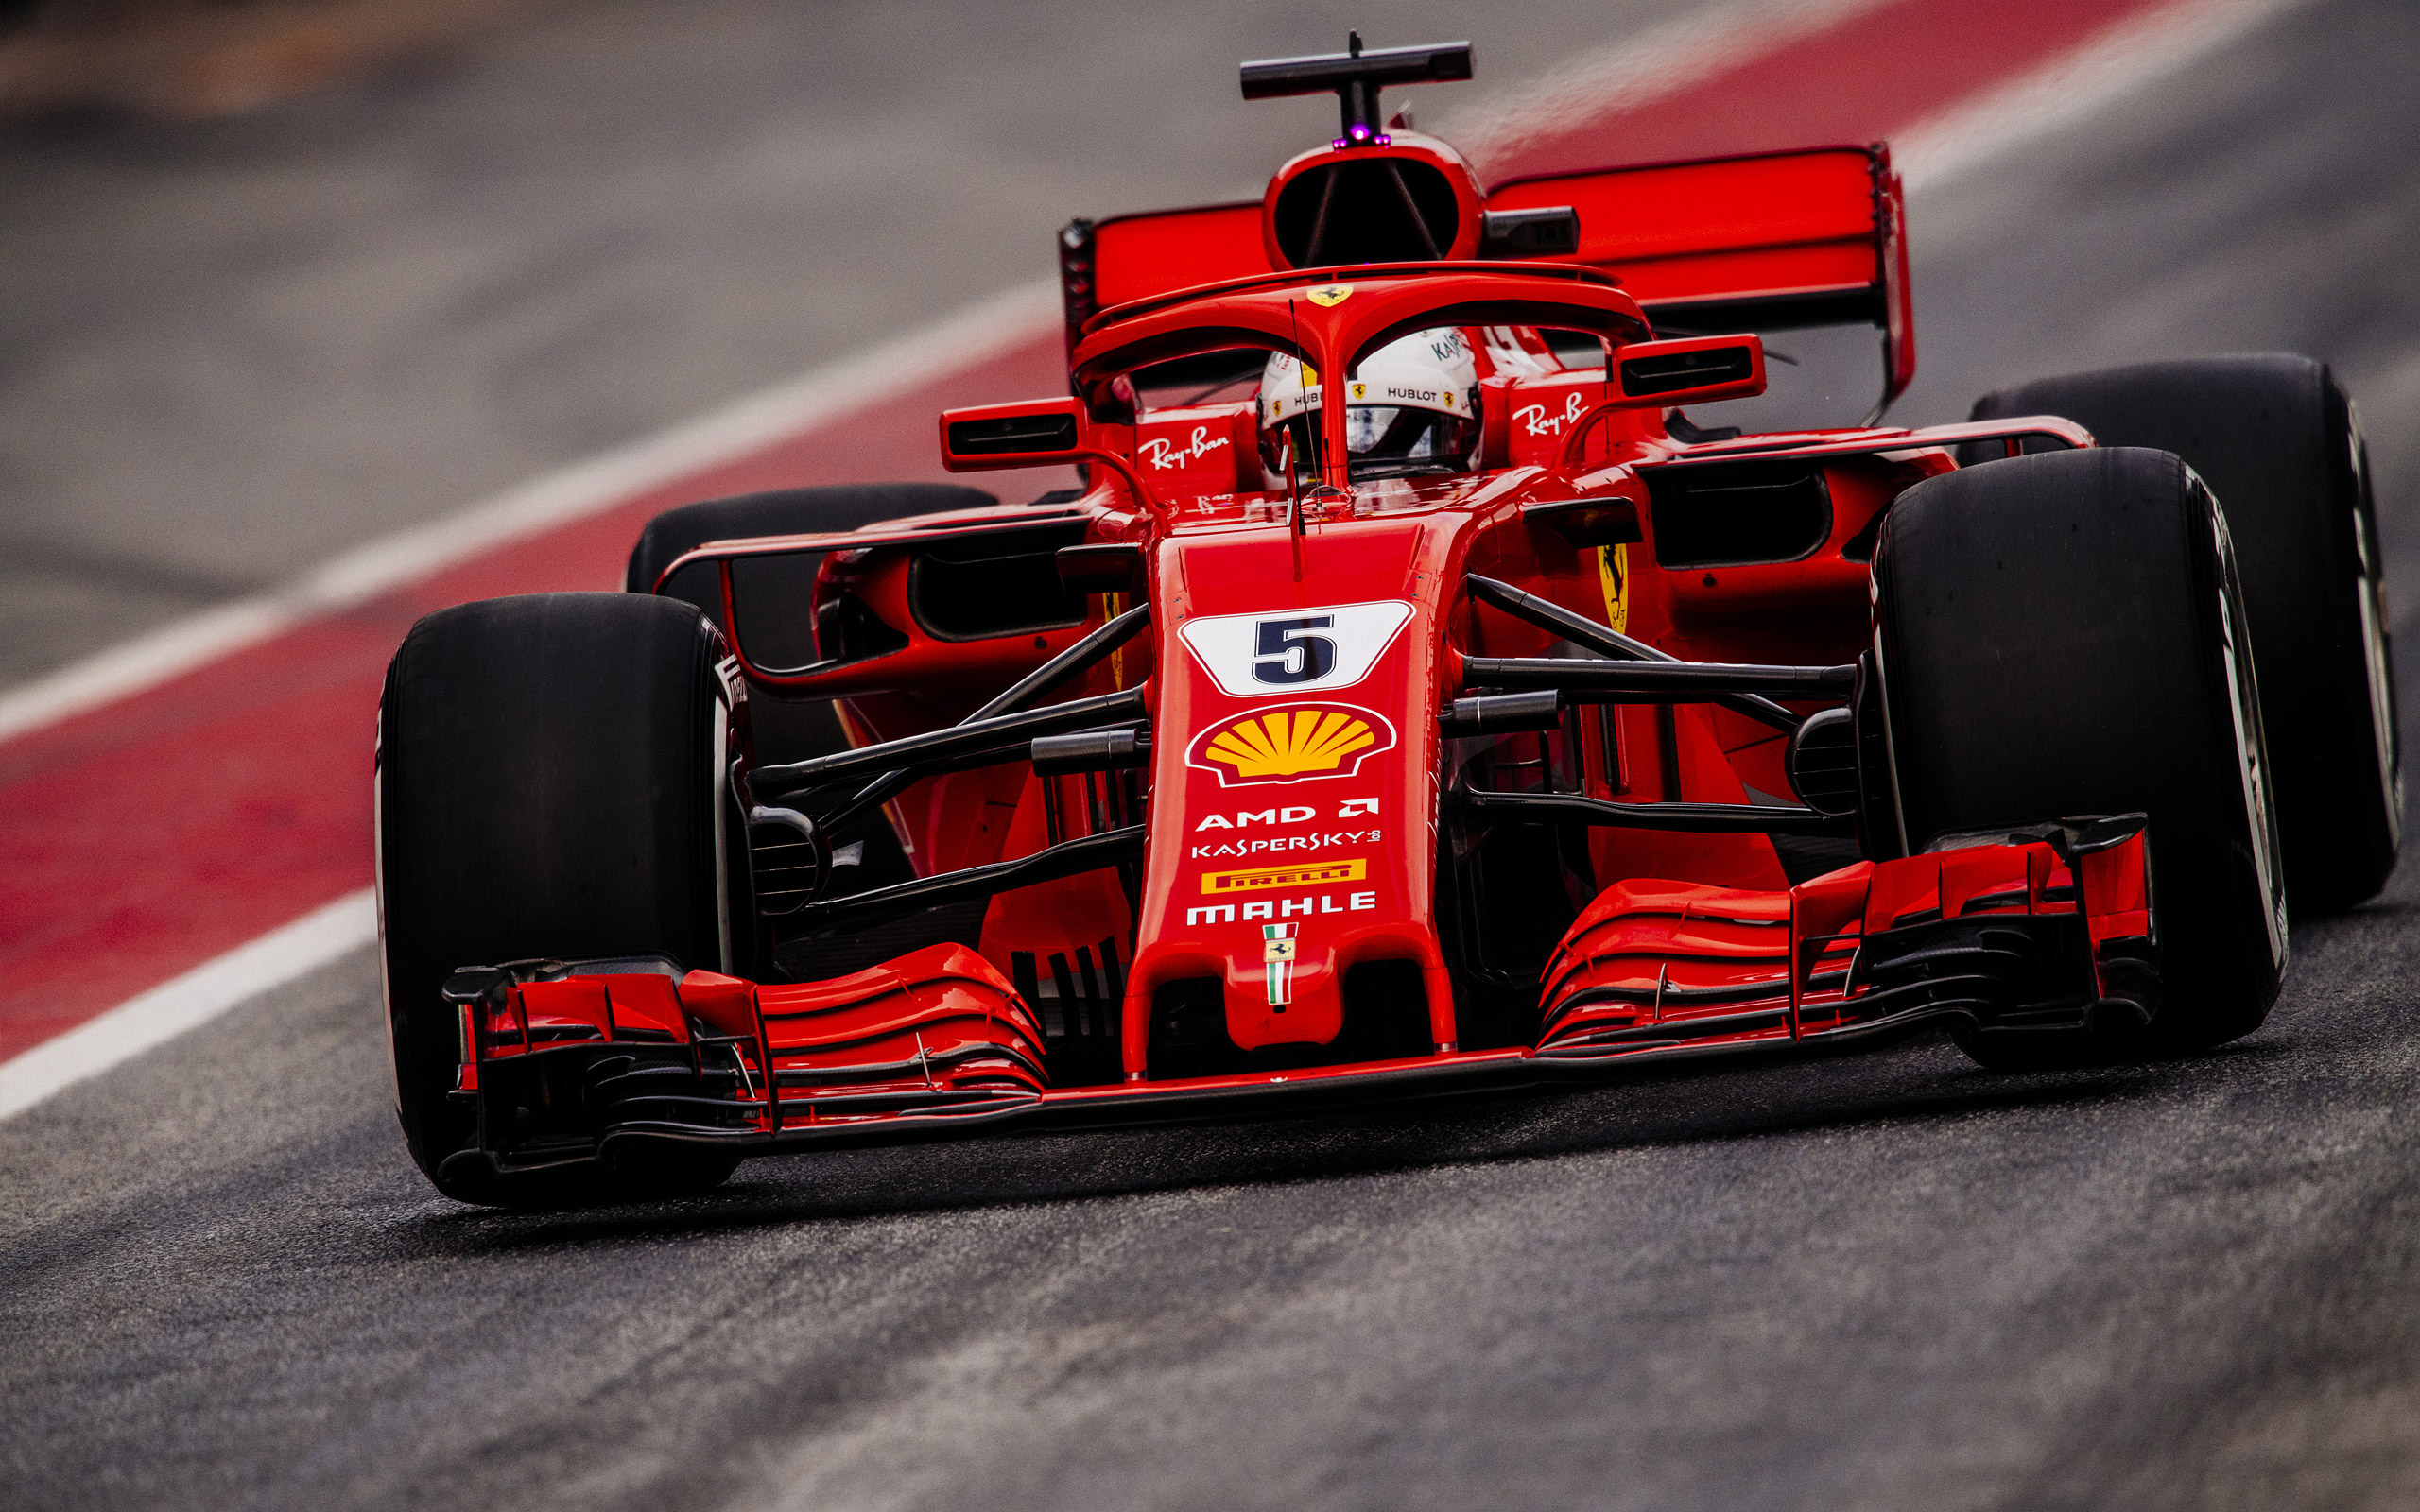 2018-Formula1-Ferrari-SF71H-V4-1600